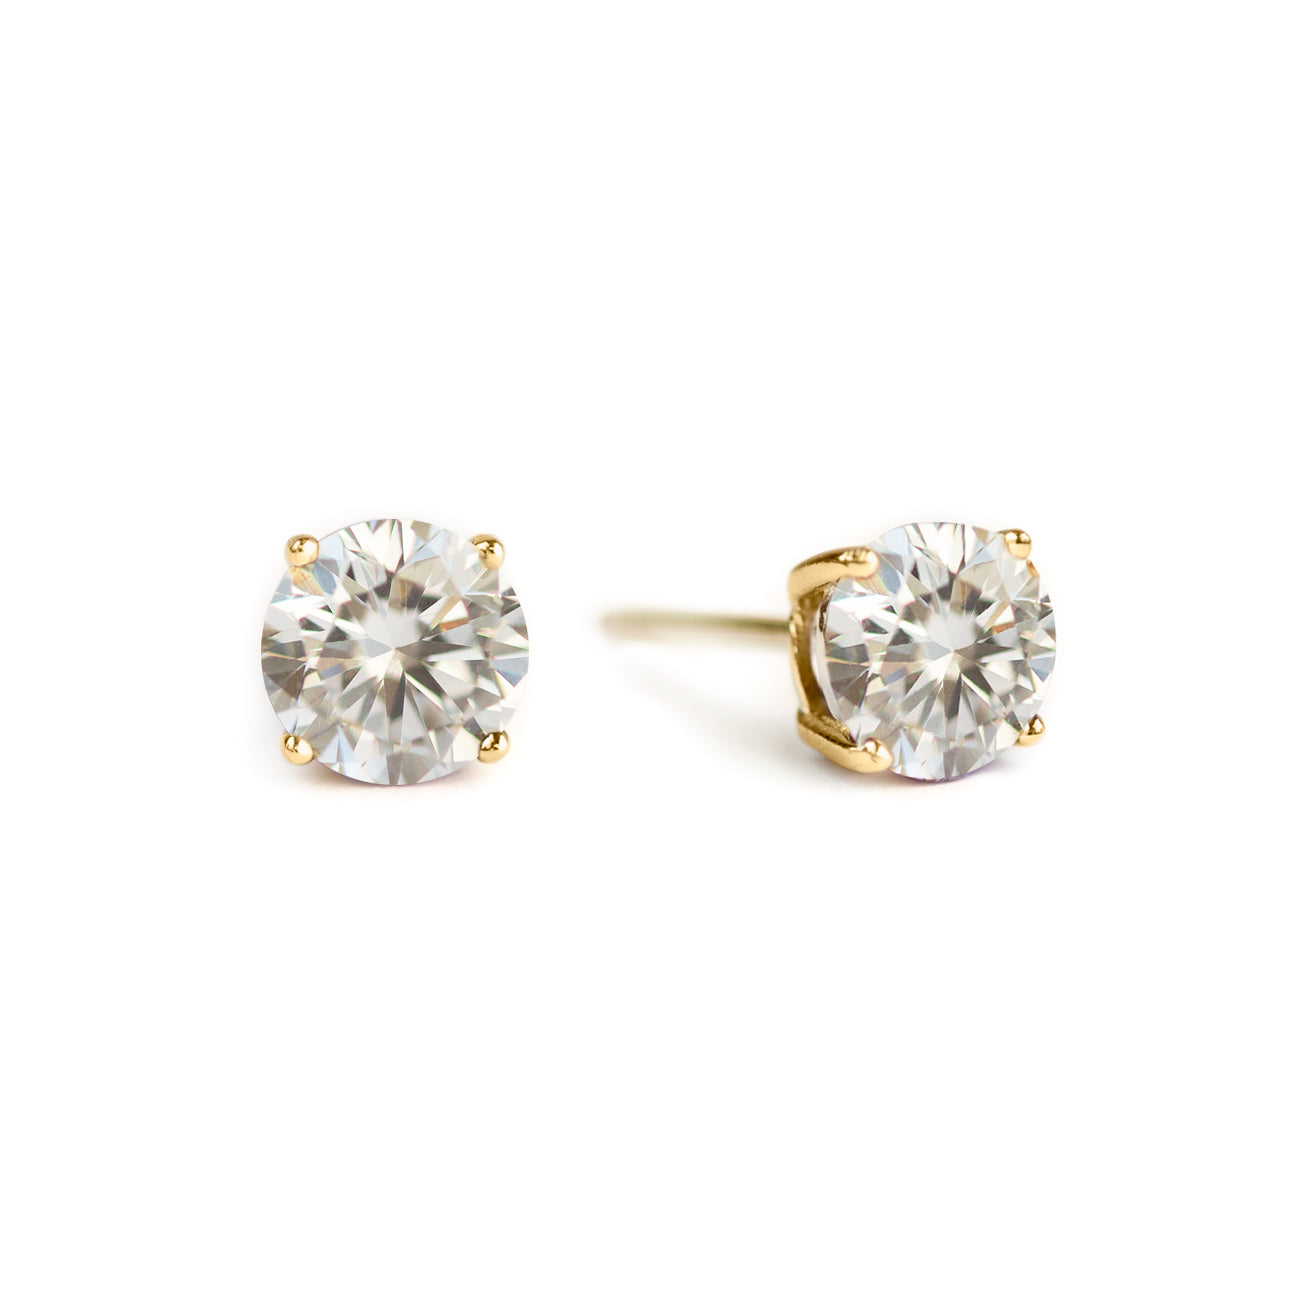 Big flower stud Crystal earrings | Ad stud earrings Pink stones | Rose Gold  Plated American Diamond stud Earrings | Bollywood style CZ Studs